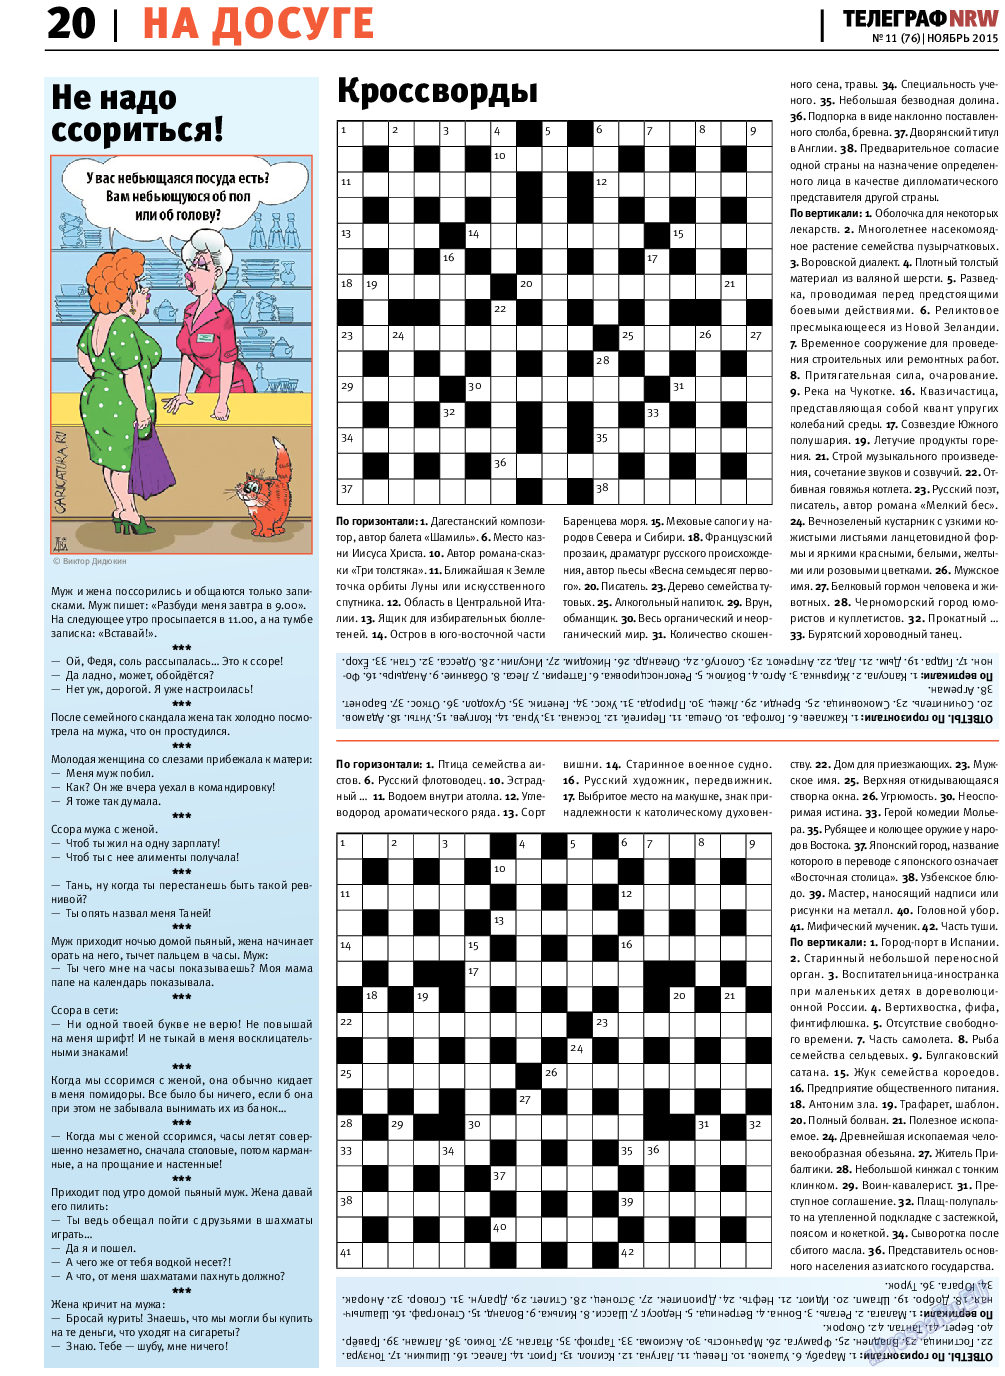 Телеграф NRW, газета. 2015 №11 стр.20